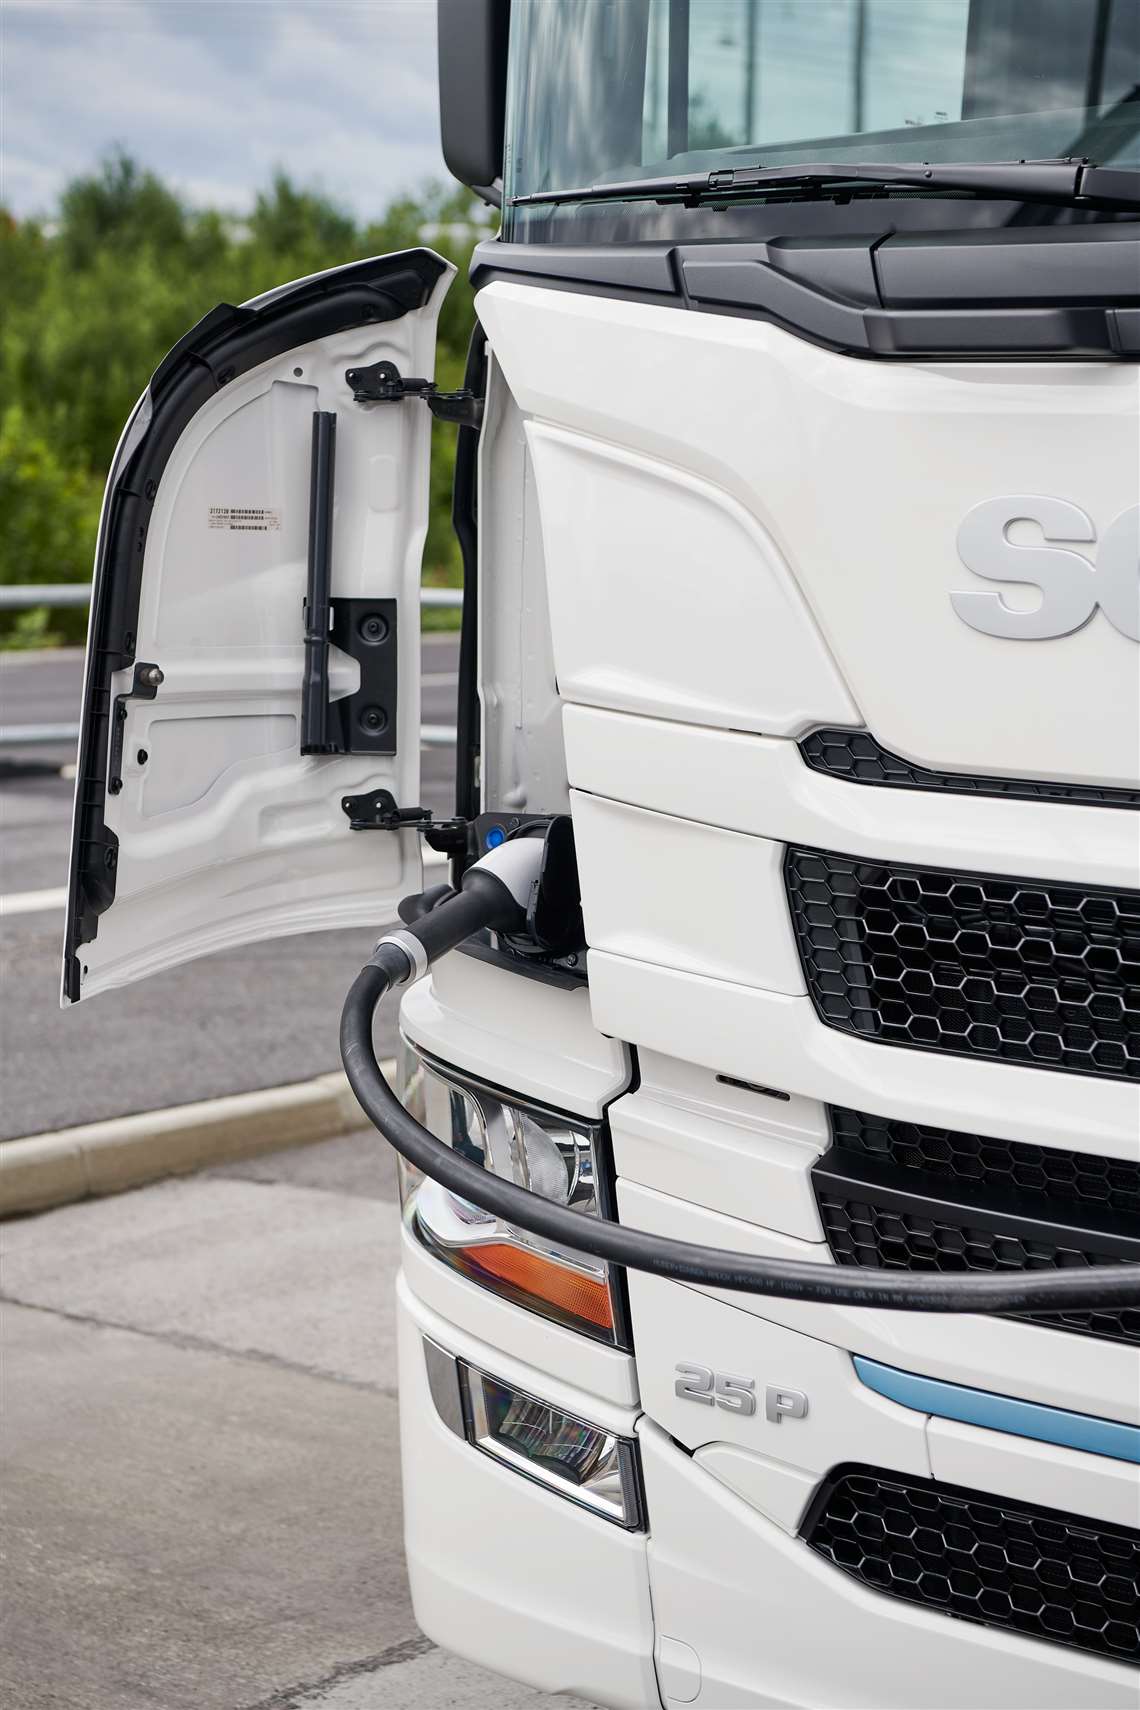 Scania BEV charging